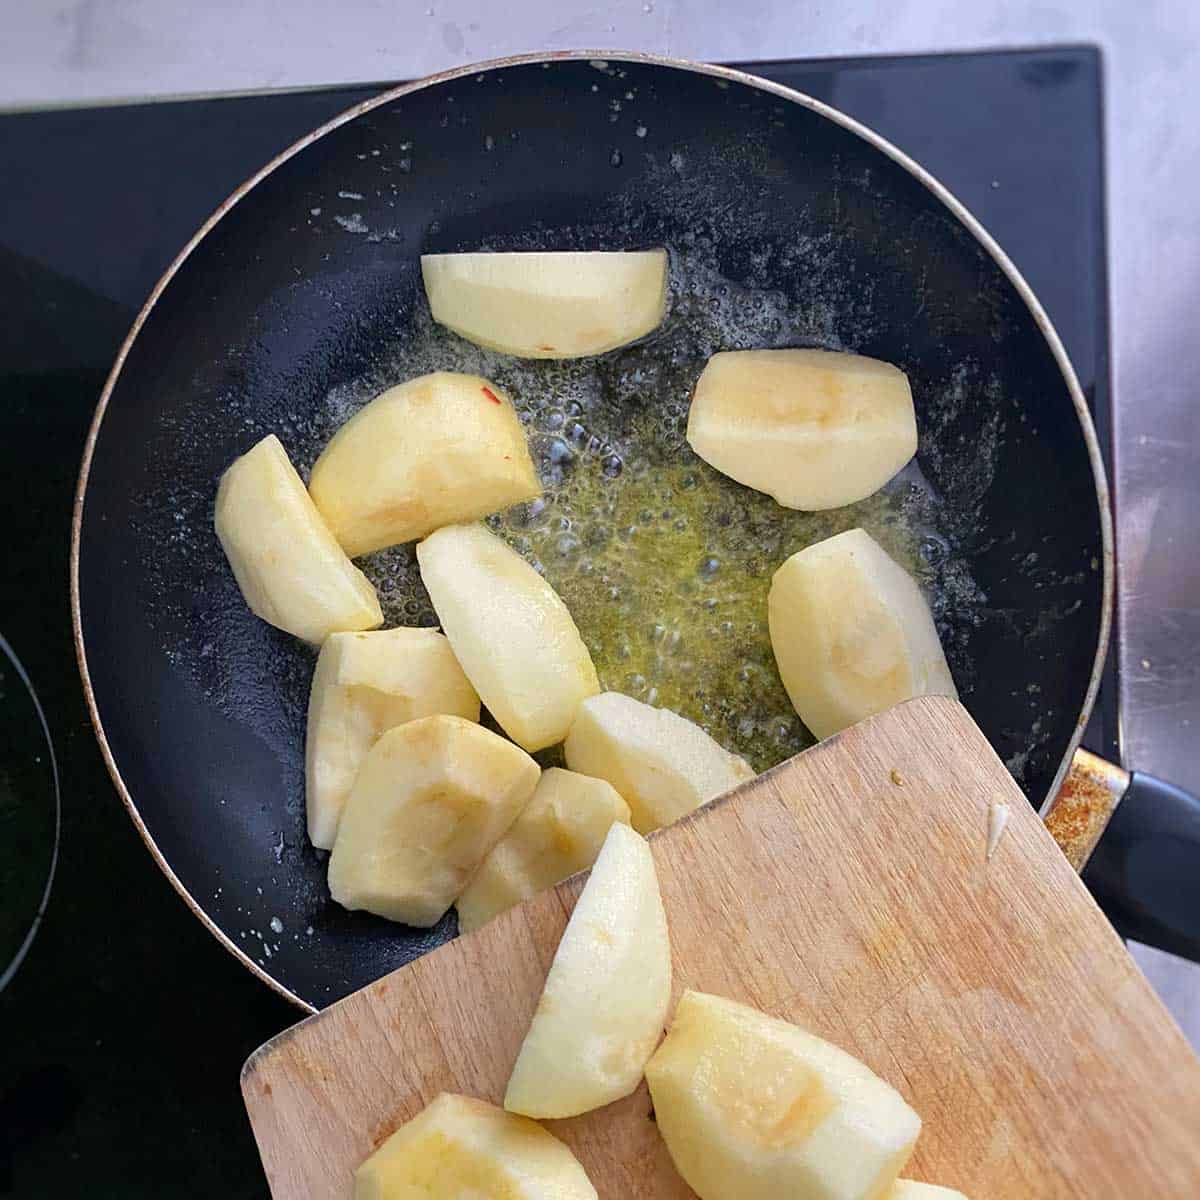 Apples caramelising in a frying pan.